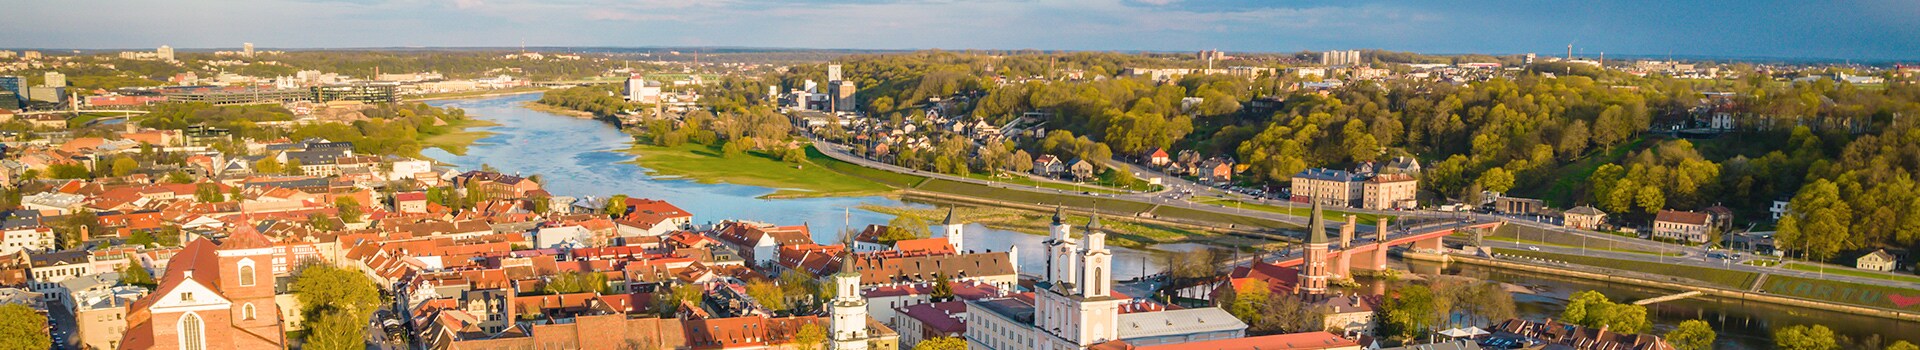 Siviglia - Kaunas international